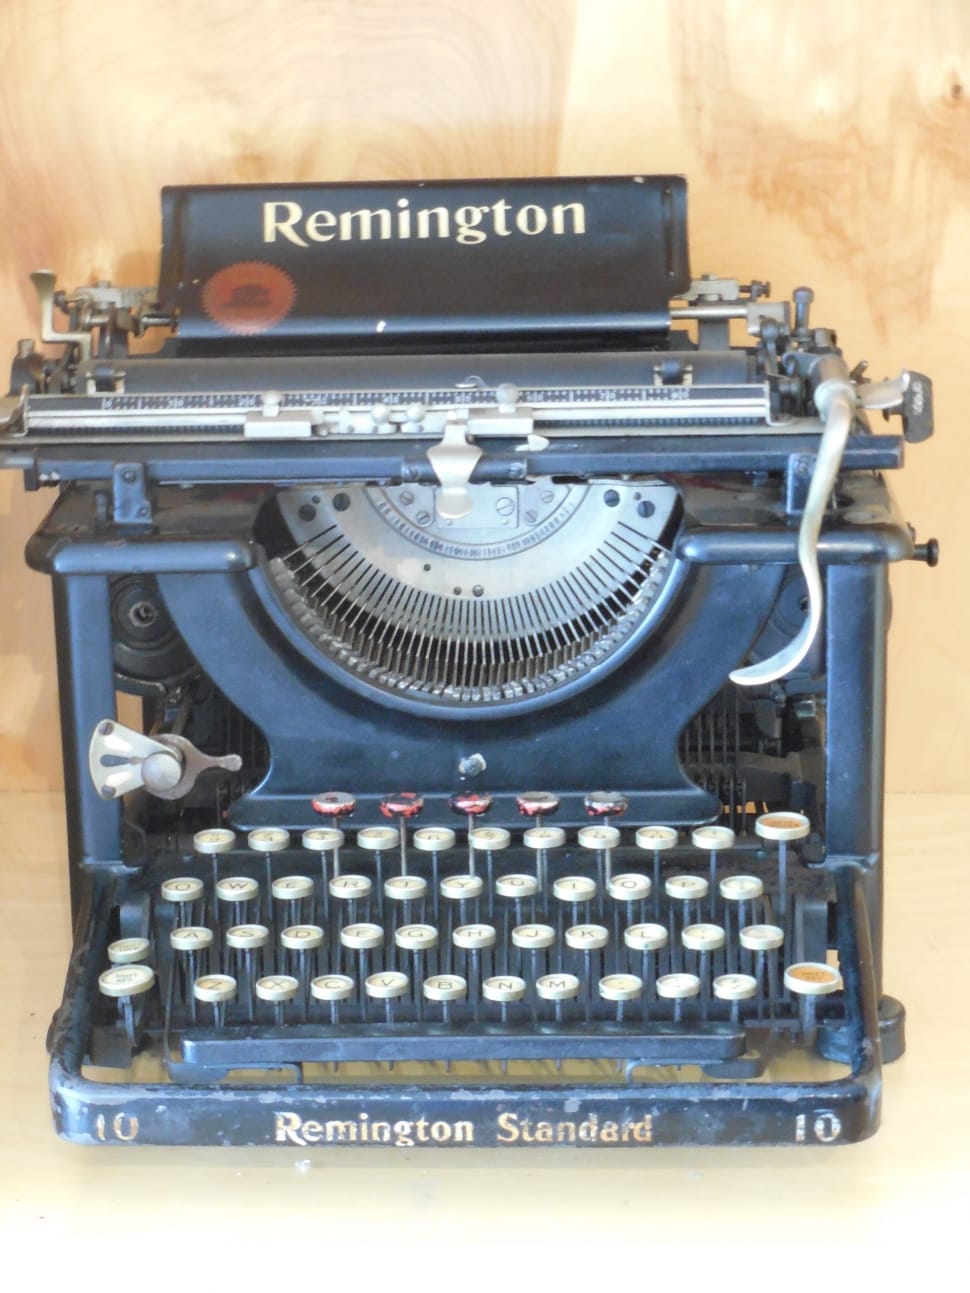 black and gray remington standard typewriter preview